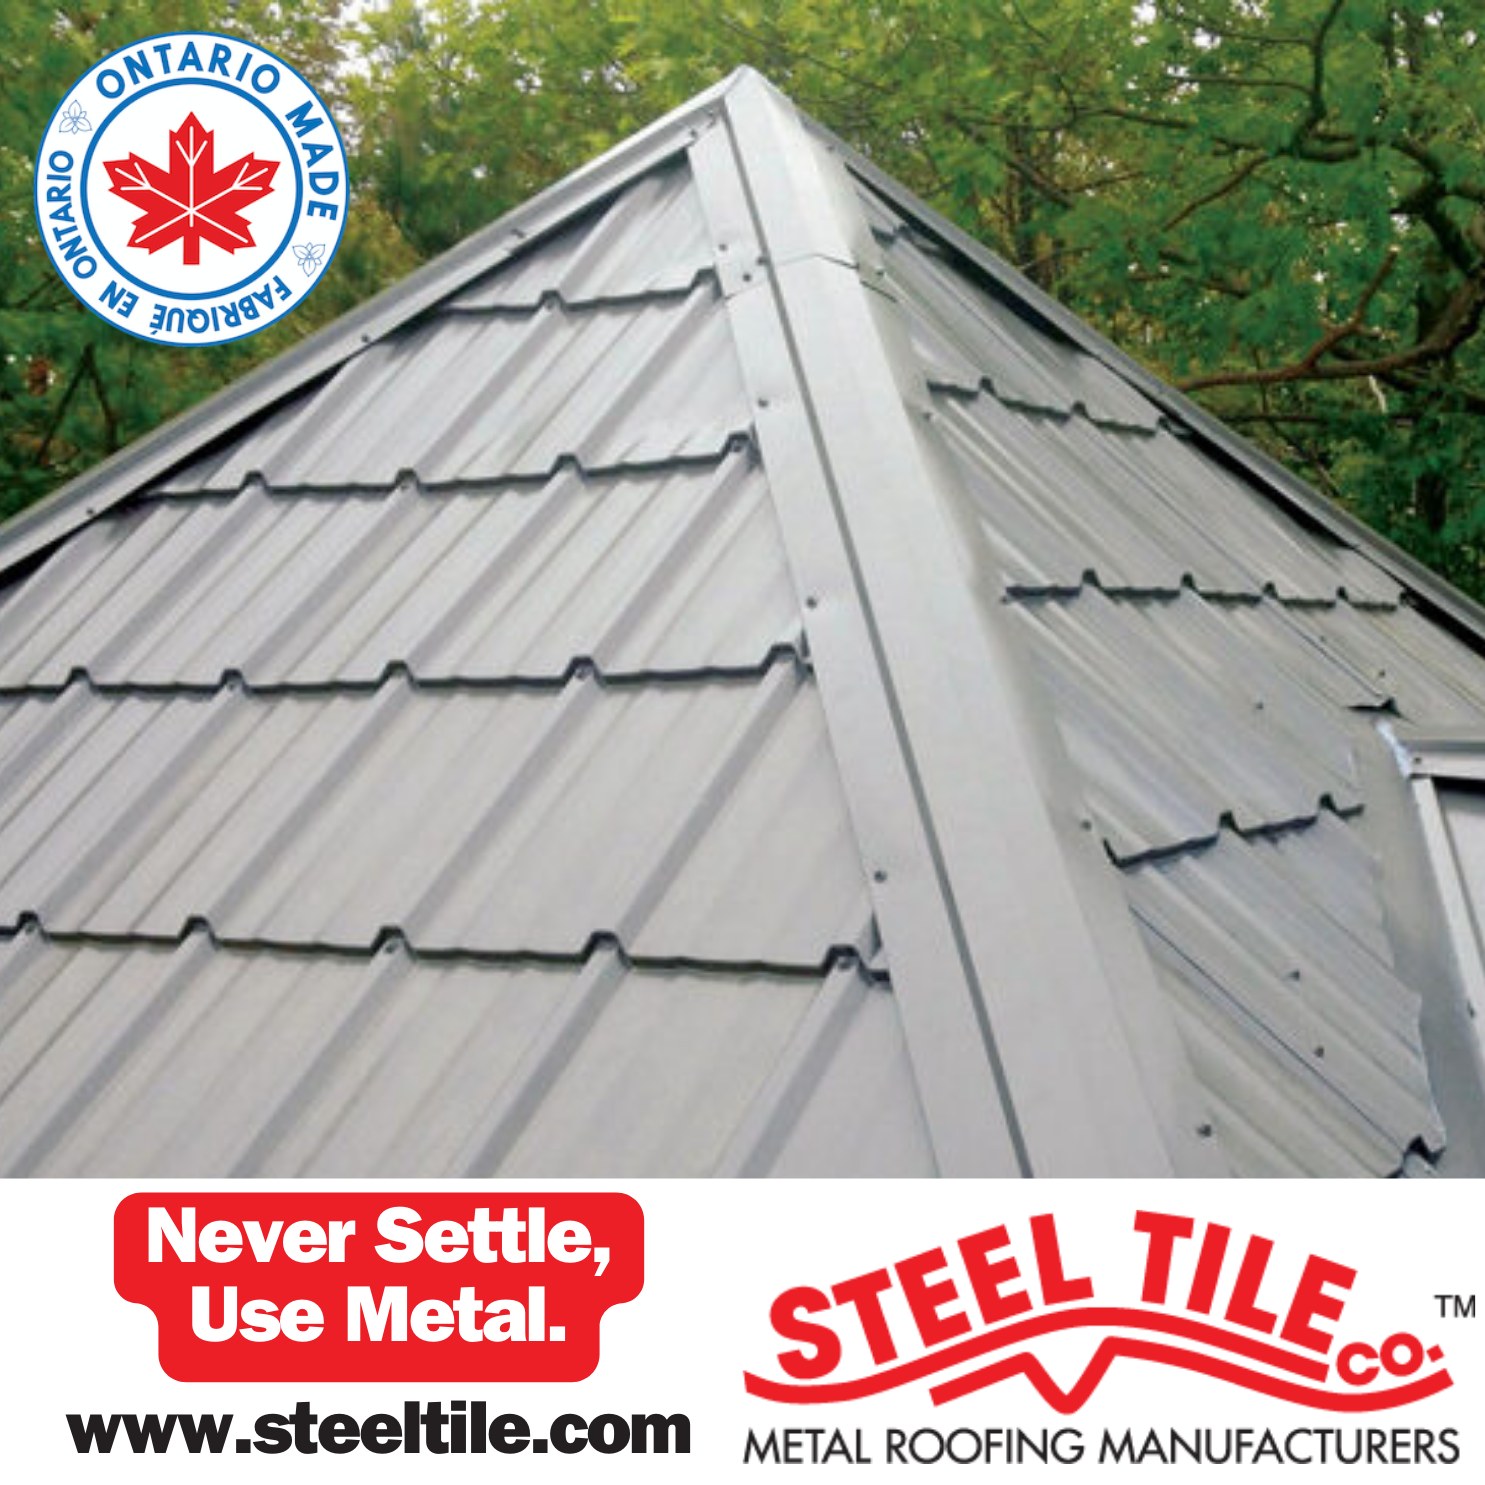 Steel Tile Co. 3487 Thomas St, Innisfil Ontario L9S 3W4